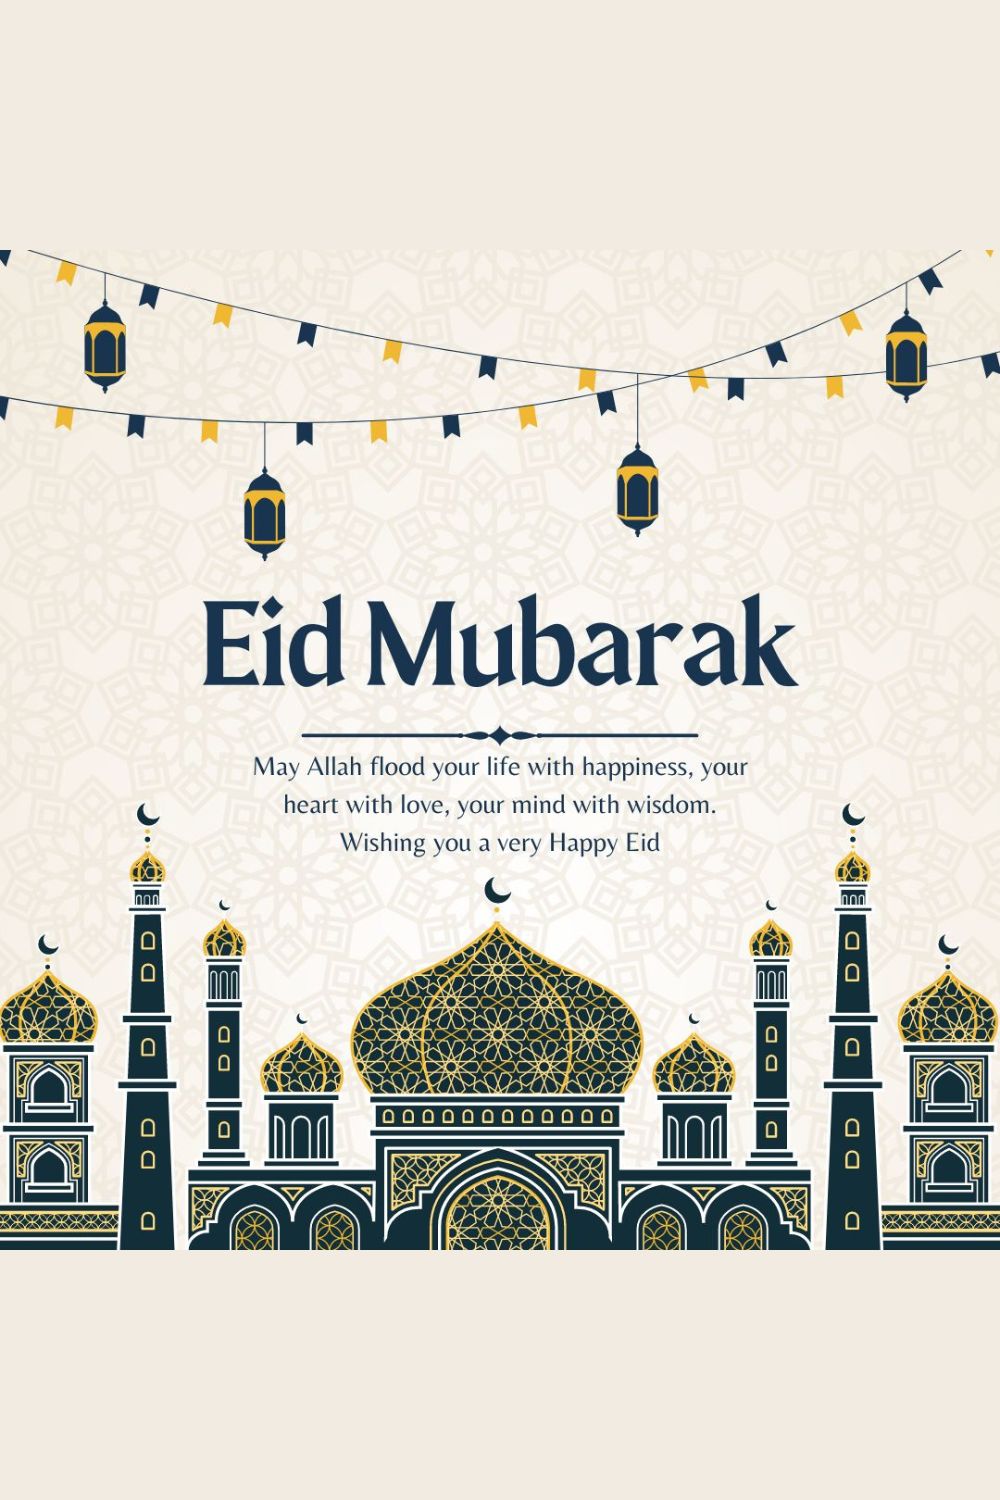 Festival Eid Mubarak Instagram Post Template pinterest preview image.